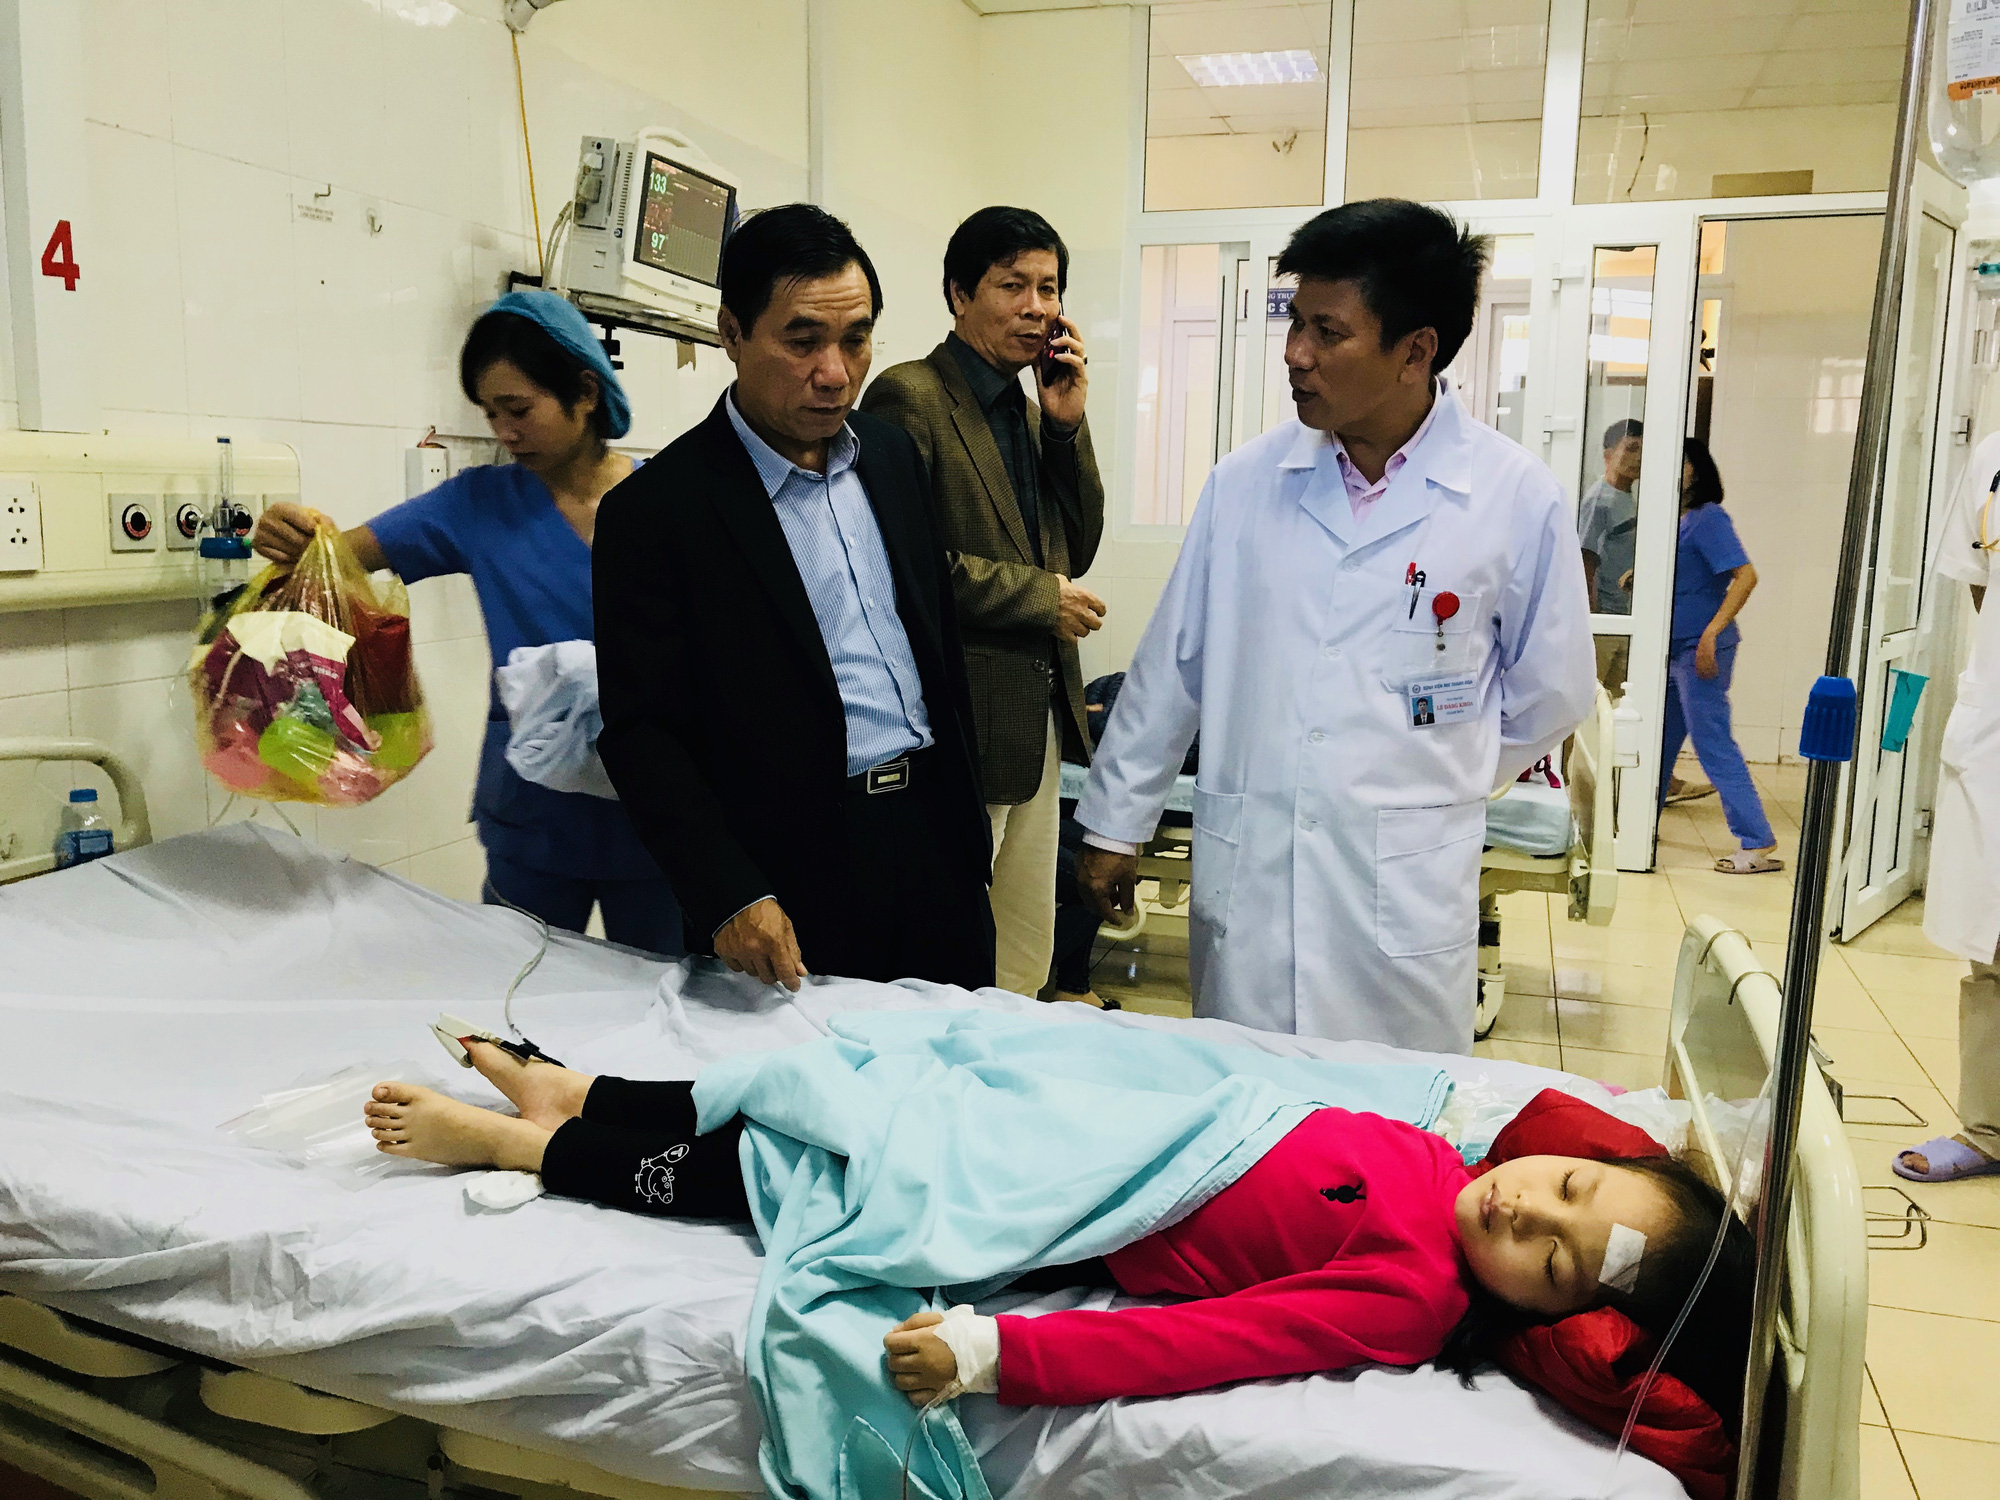 130 kindergarteners hospitalized for suspected food poisoning in Vietnam